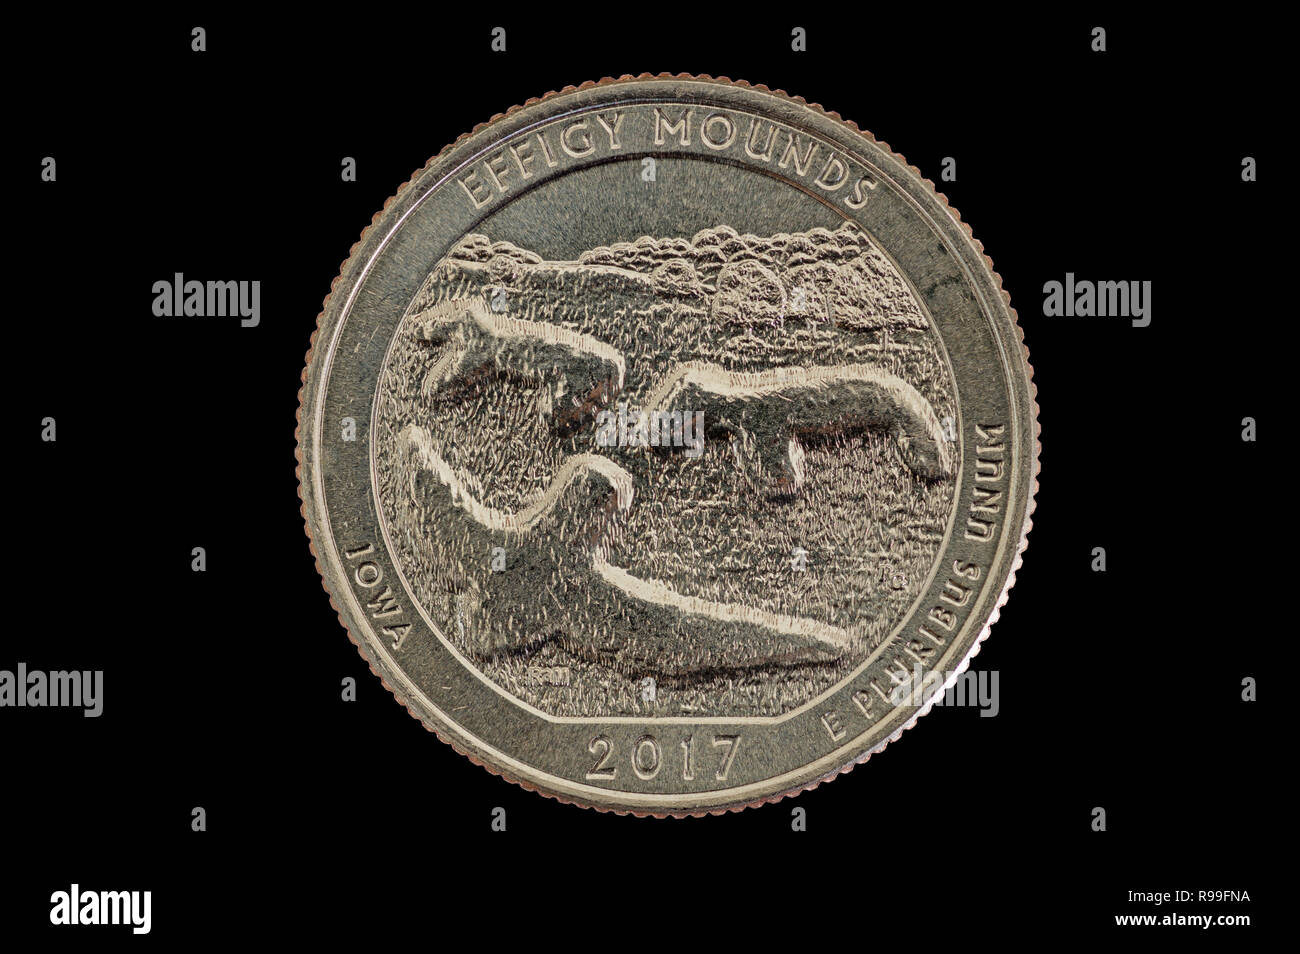 Effigy Mounds commemorative quarter coin isolated on black Stock Photo